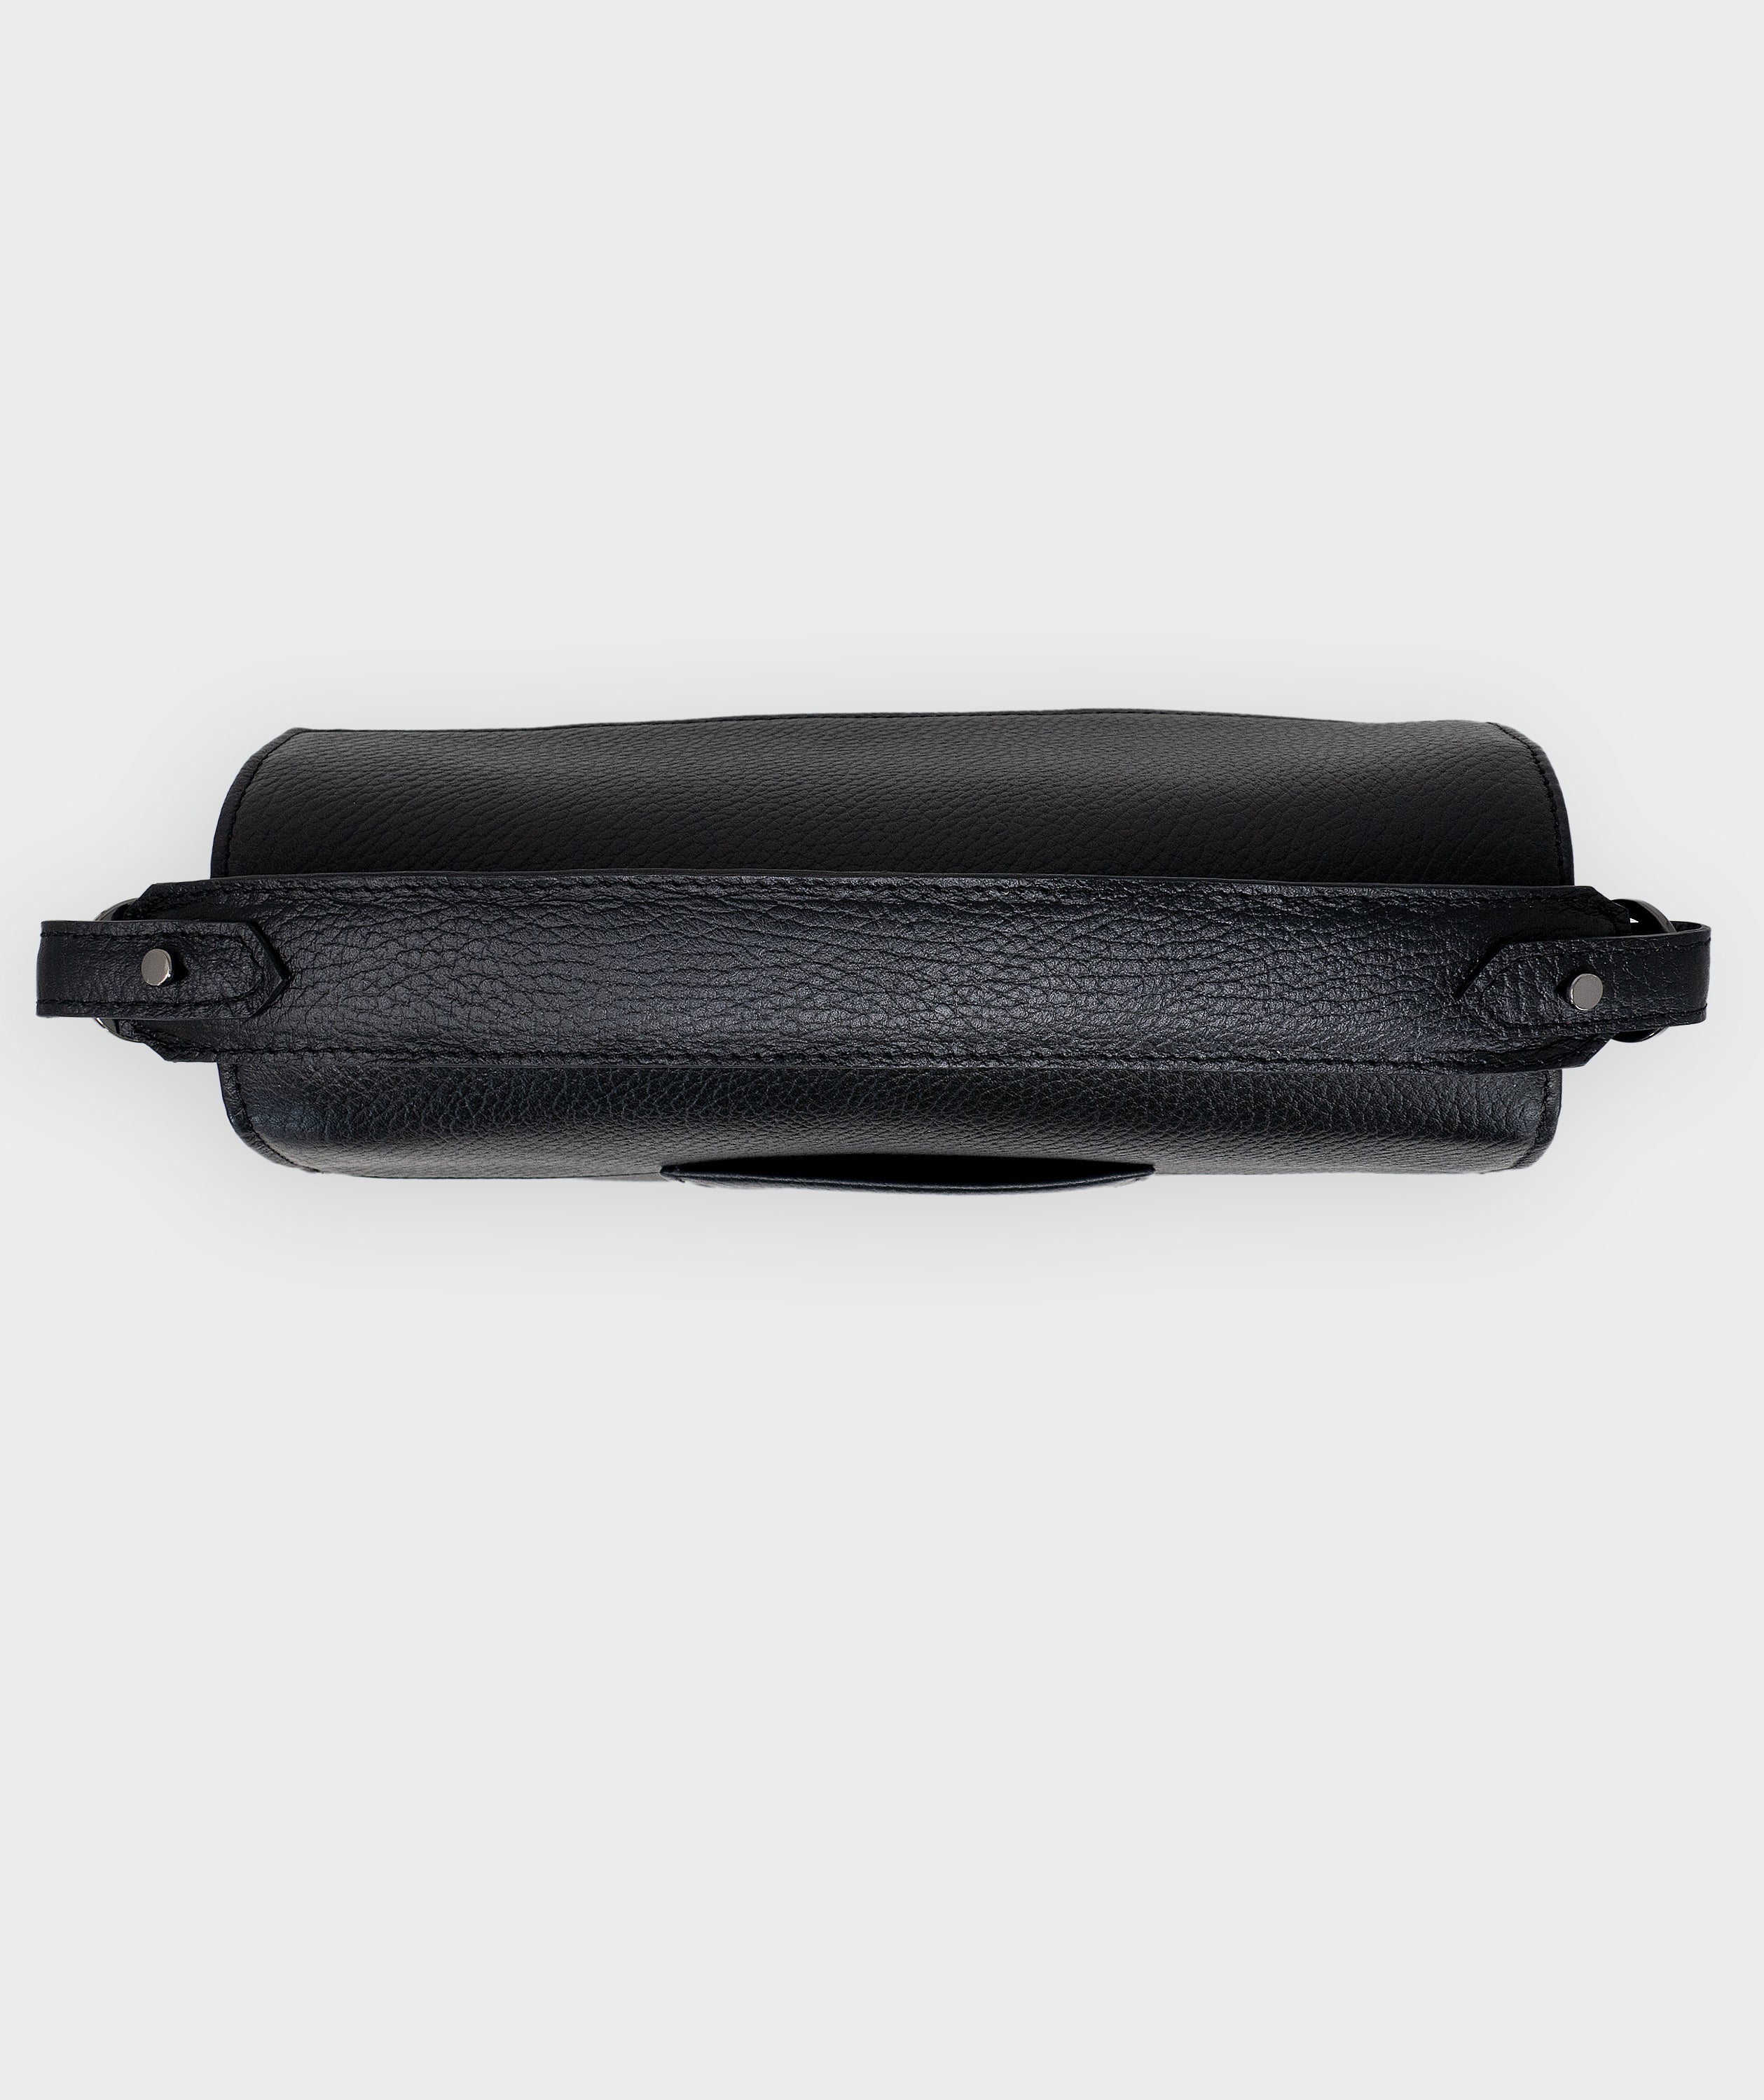 Anastasio Medium Crossbody Handbag Black Leather - Eyes Embroidery - Top view